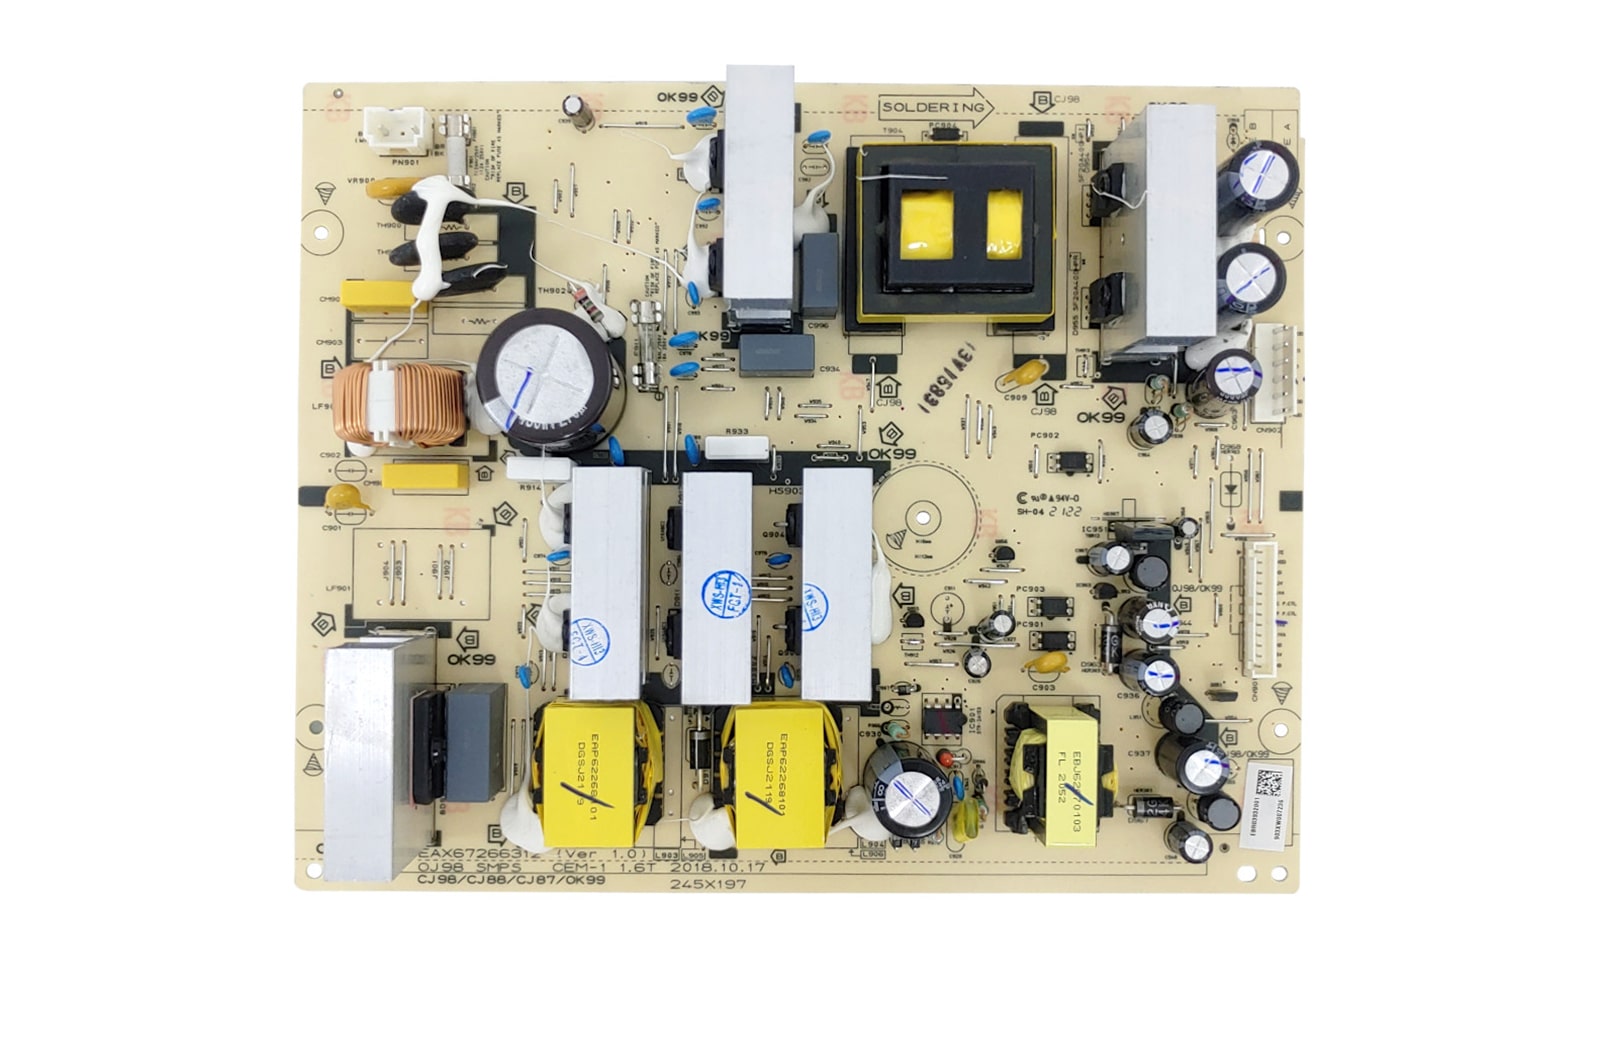 LG Placa da fonte para aparelho Mini System LG CJ87 - CJ88 - EBR83932001, EBR83932001